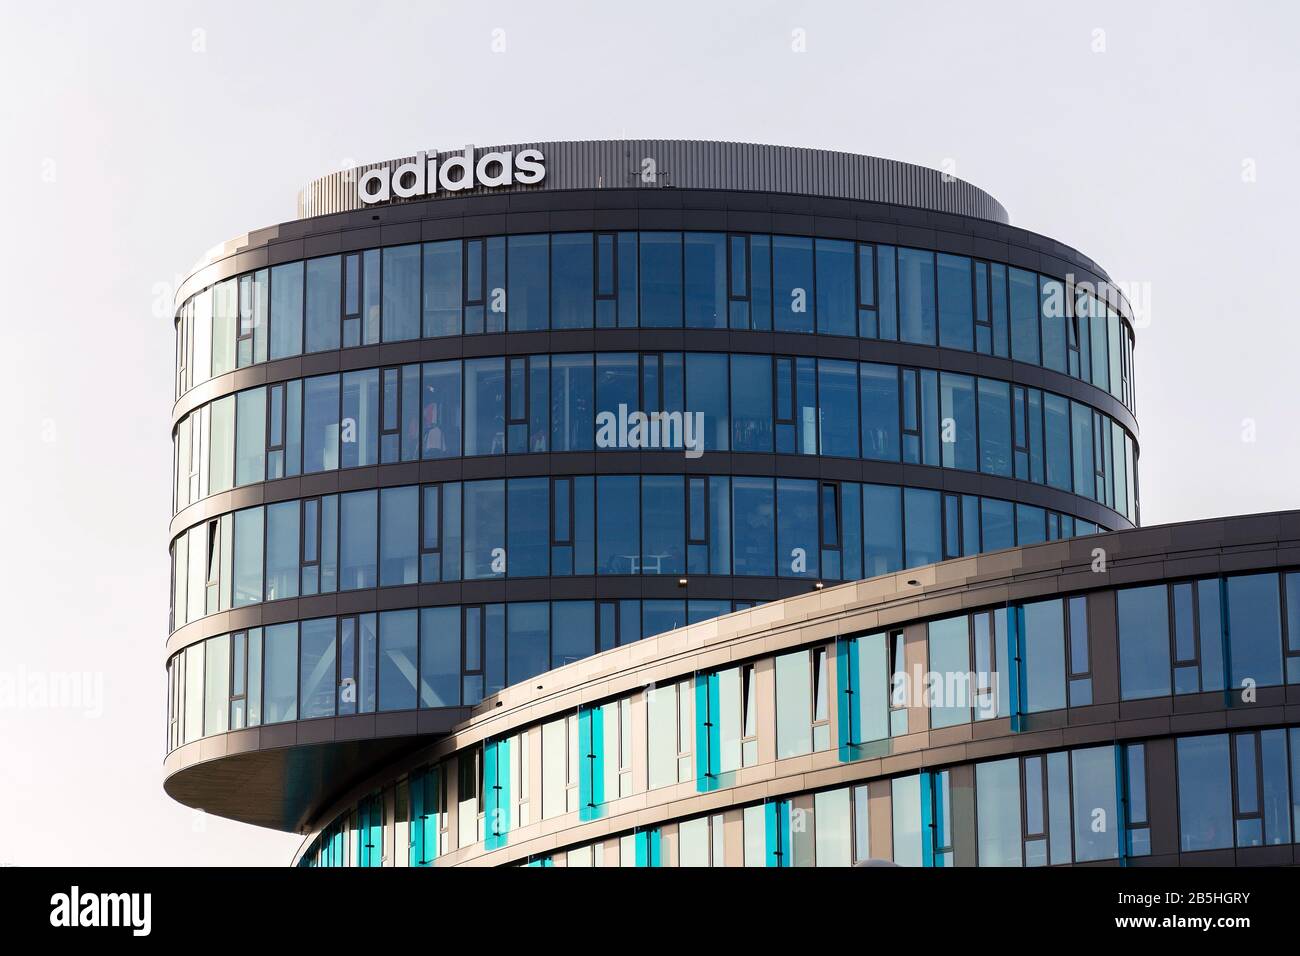 adidas stockport office